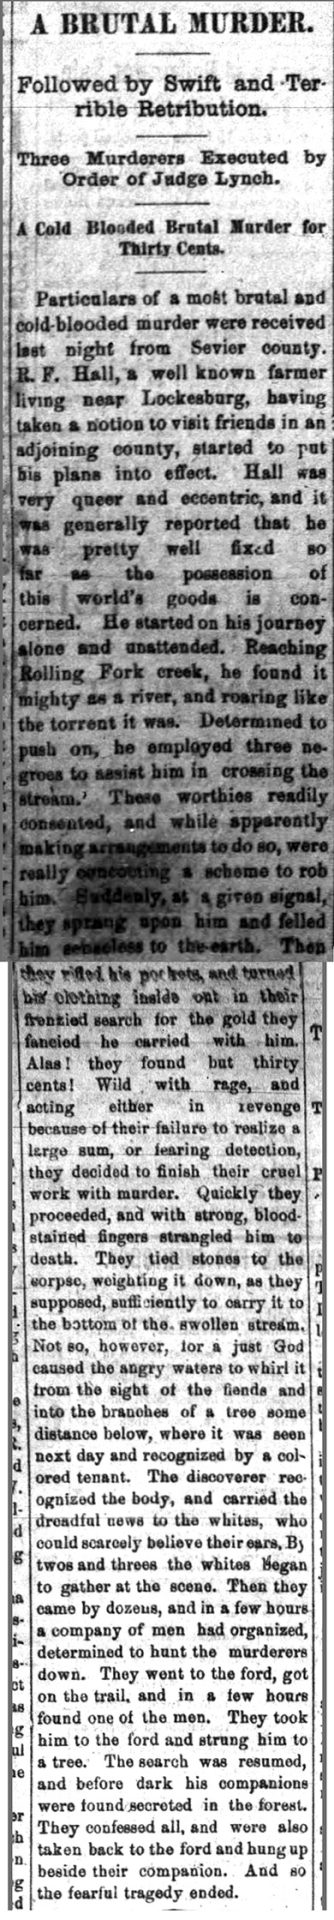 "A Brutal Murder" newspaper clipping